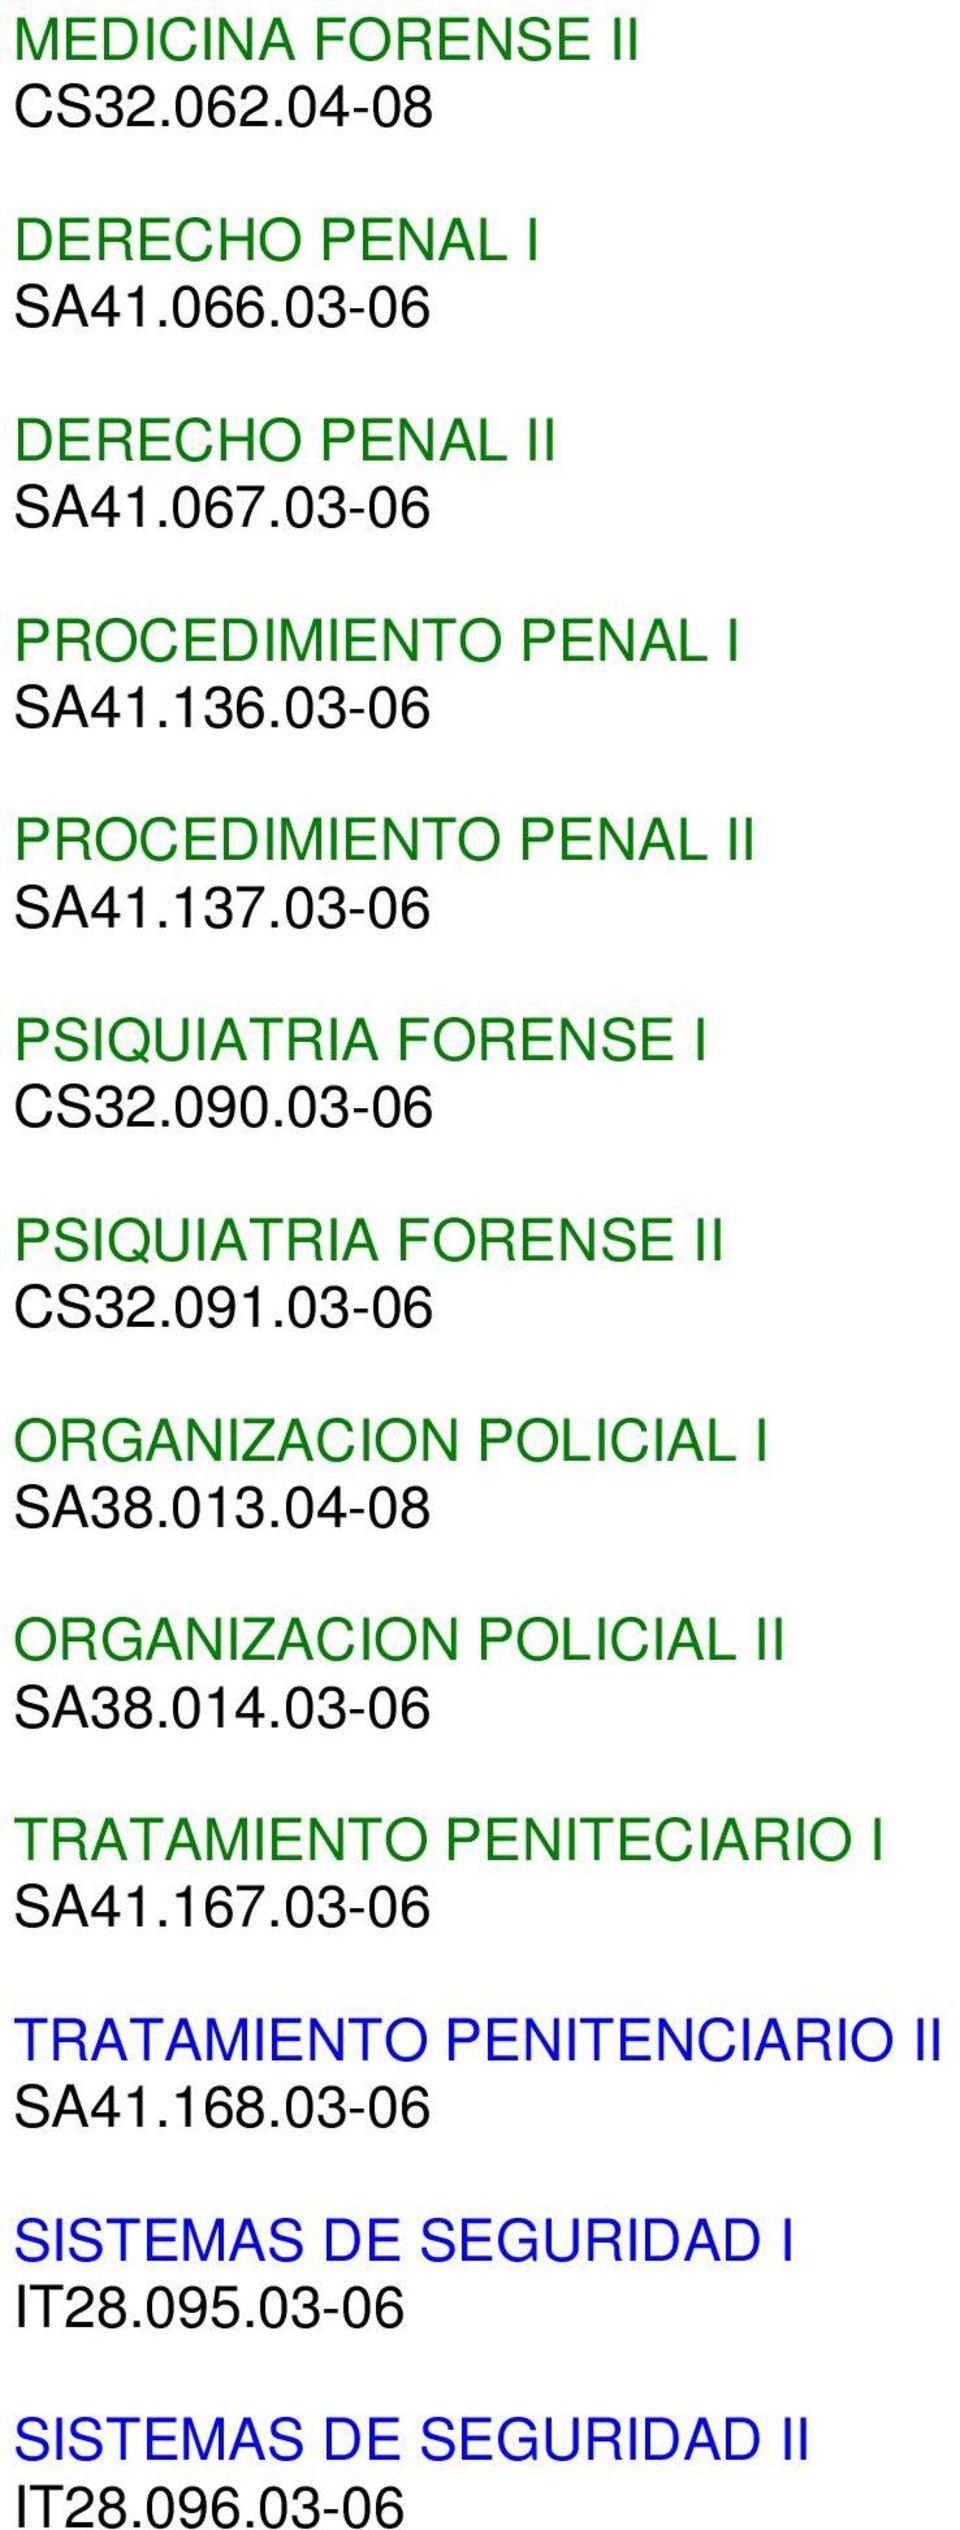 03-06 PSIQUIATRIA FORENSE II CS32.091.03-06 ORGANIZACION POLICIAL I SA38.013.04-08 ORGANIZACION POLICIAL II SA38.014.